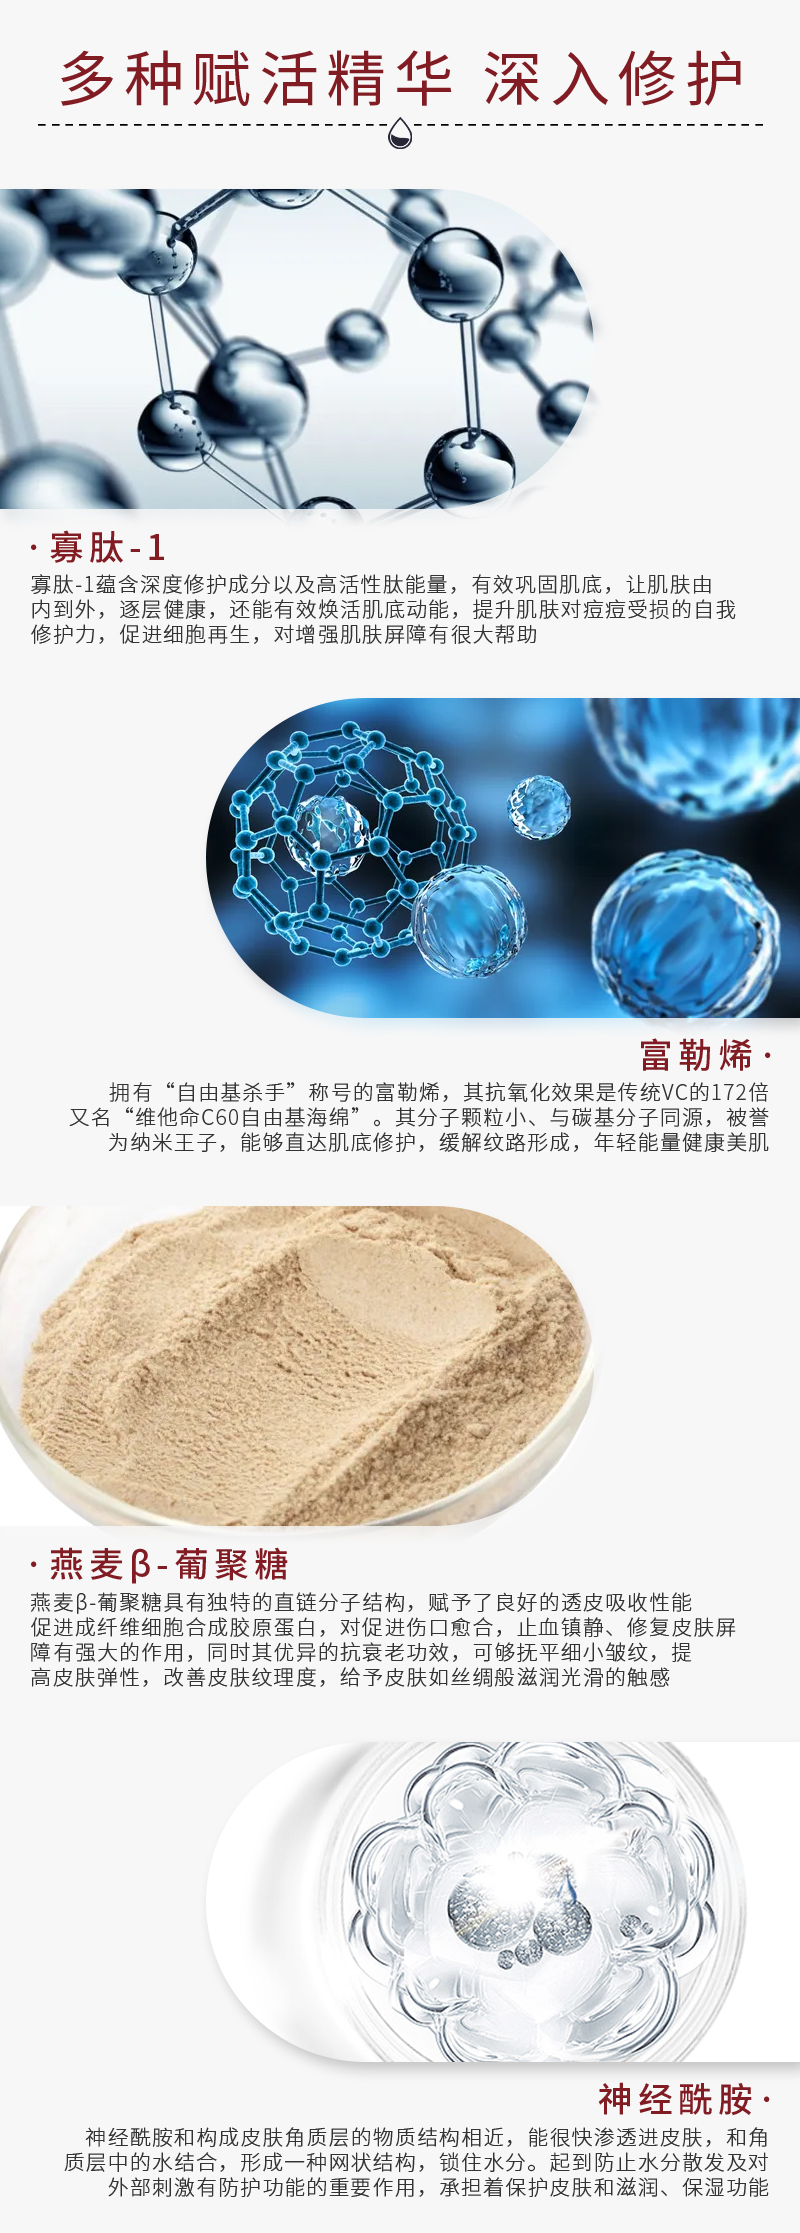 Therapeel Xiu Muning Freeze Dried Powder: -5